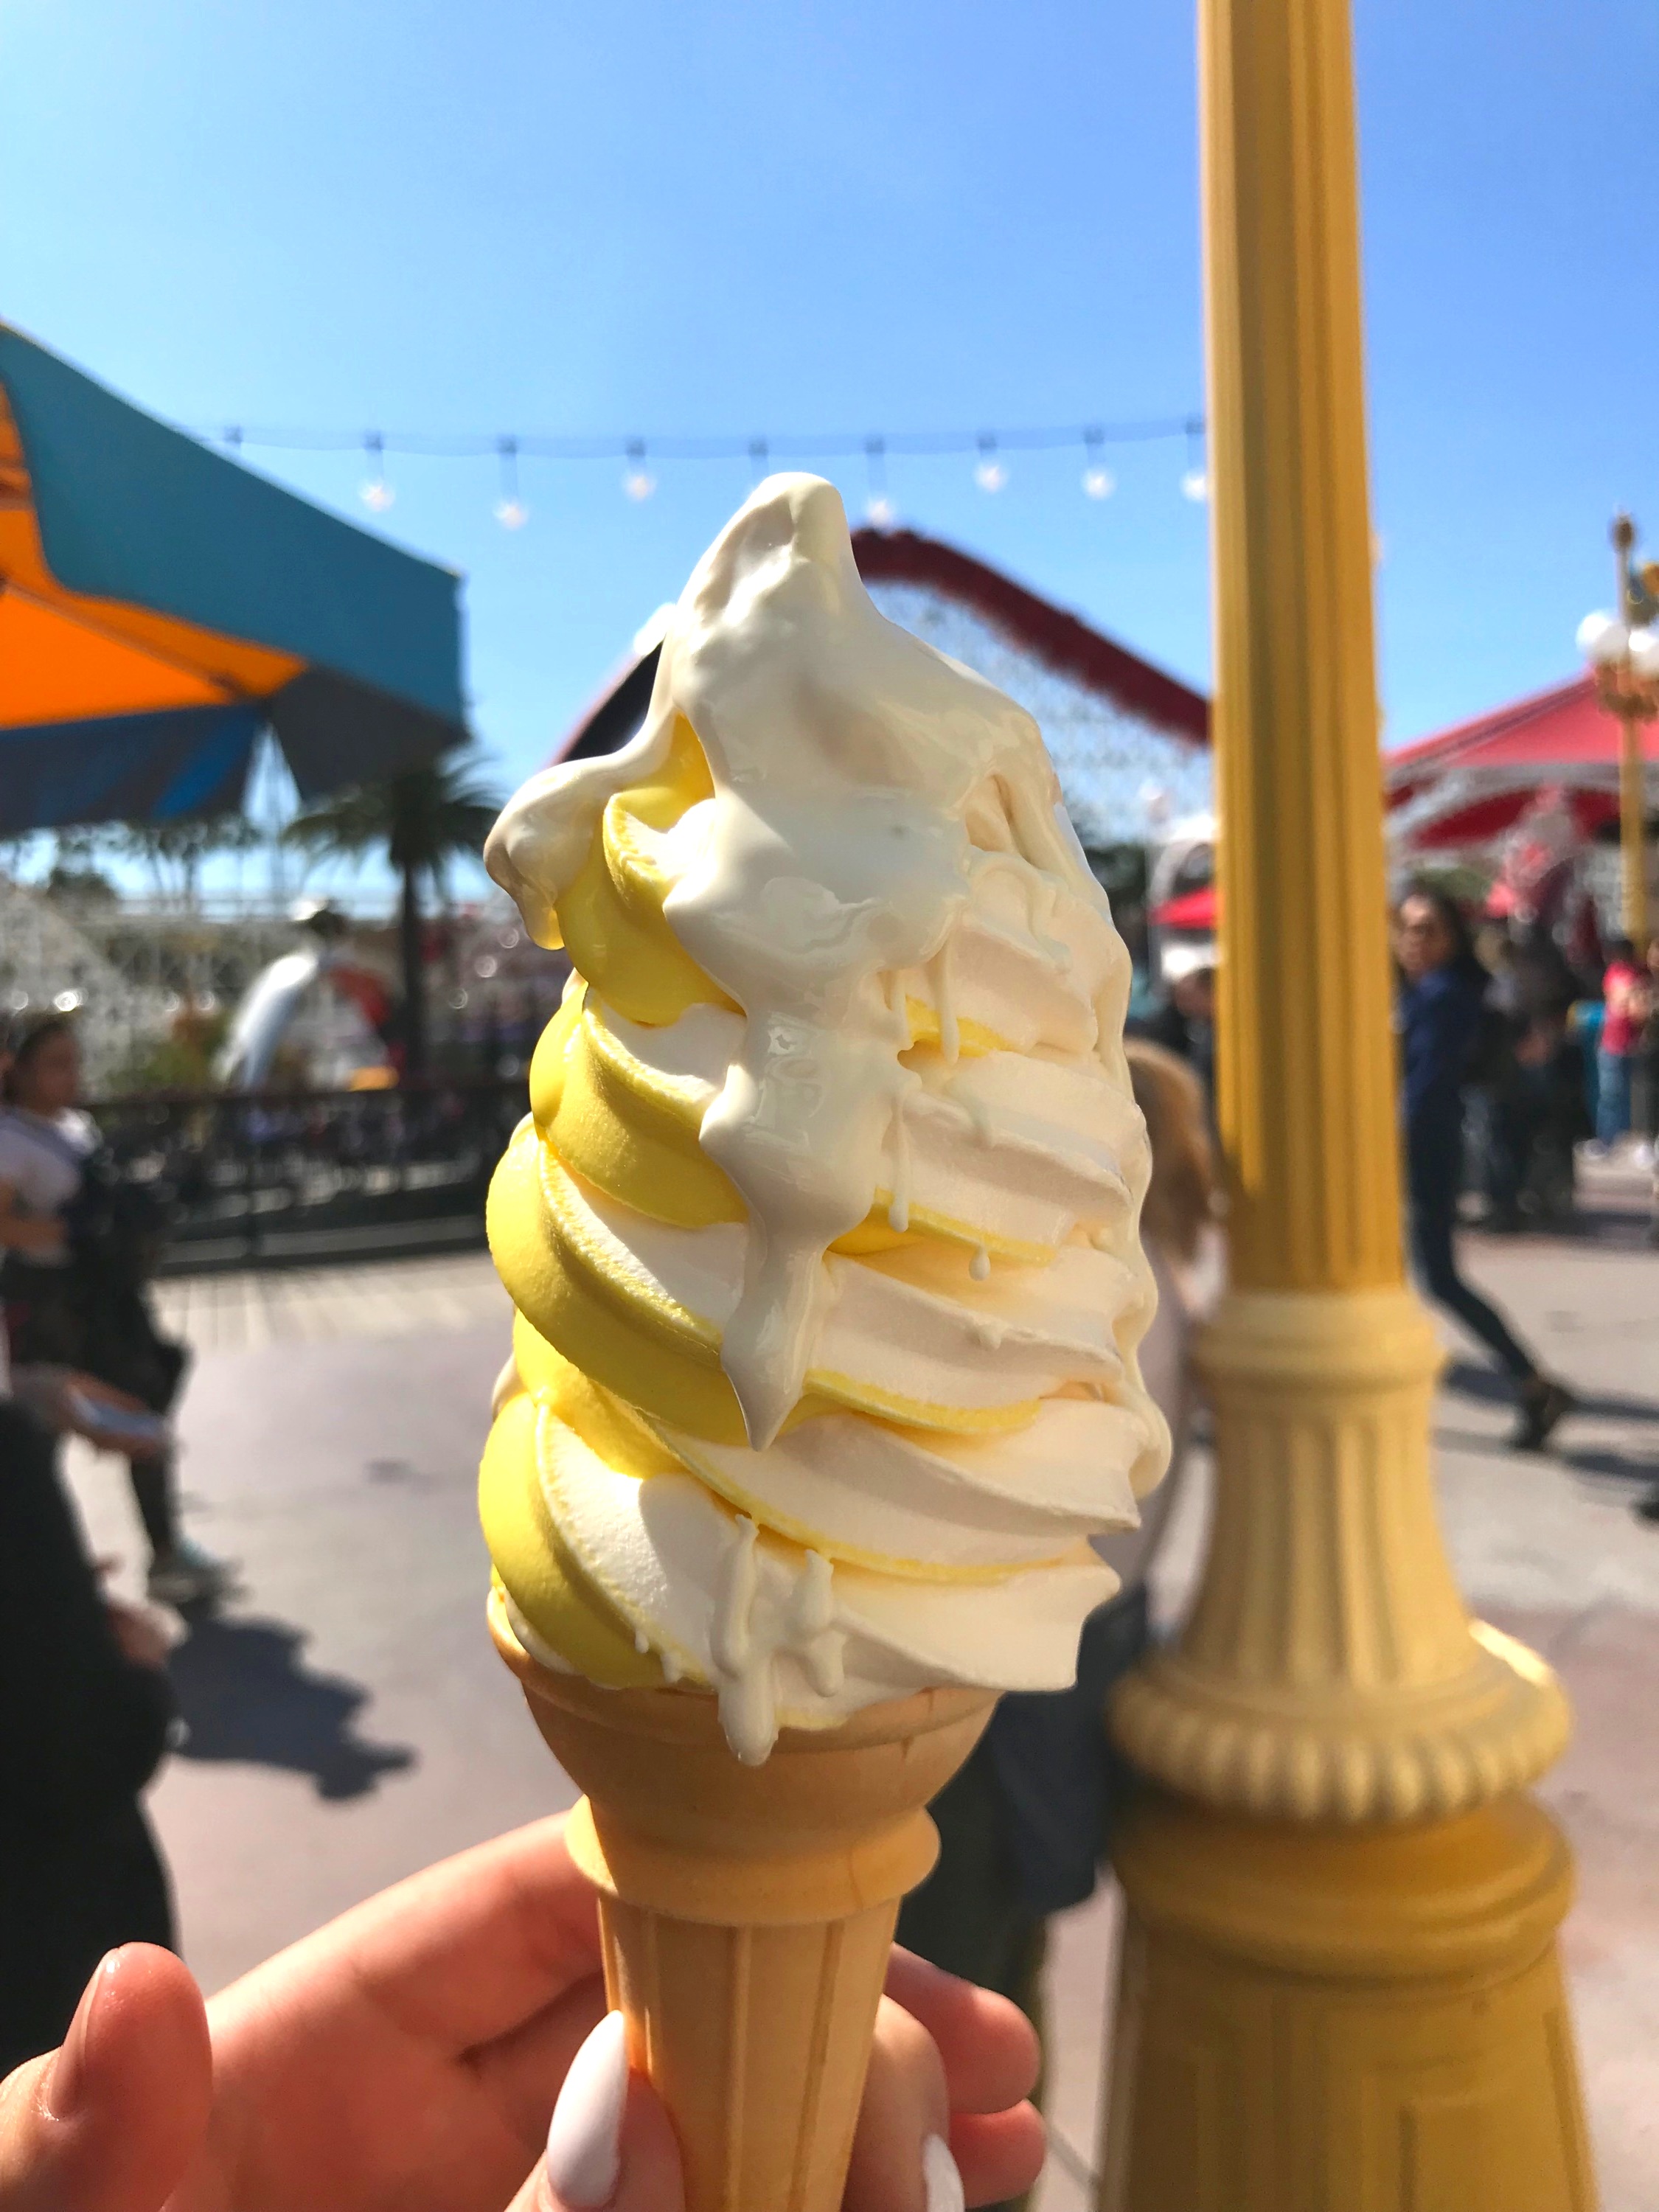 lemon vanilla swirl with snowcap - pixar pier